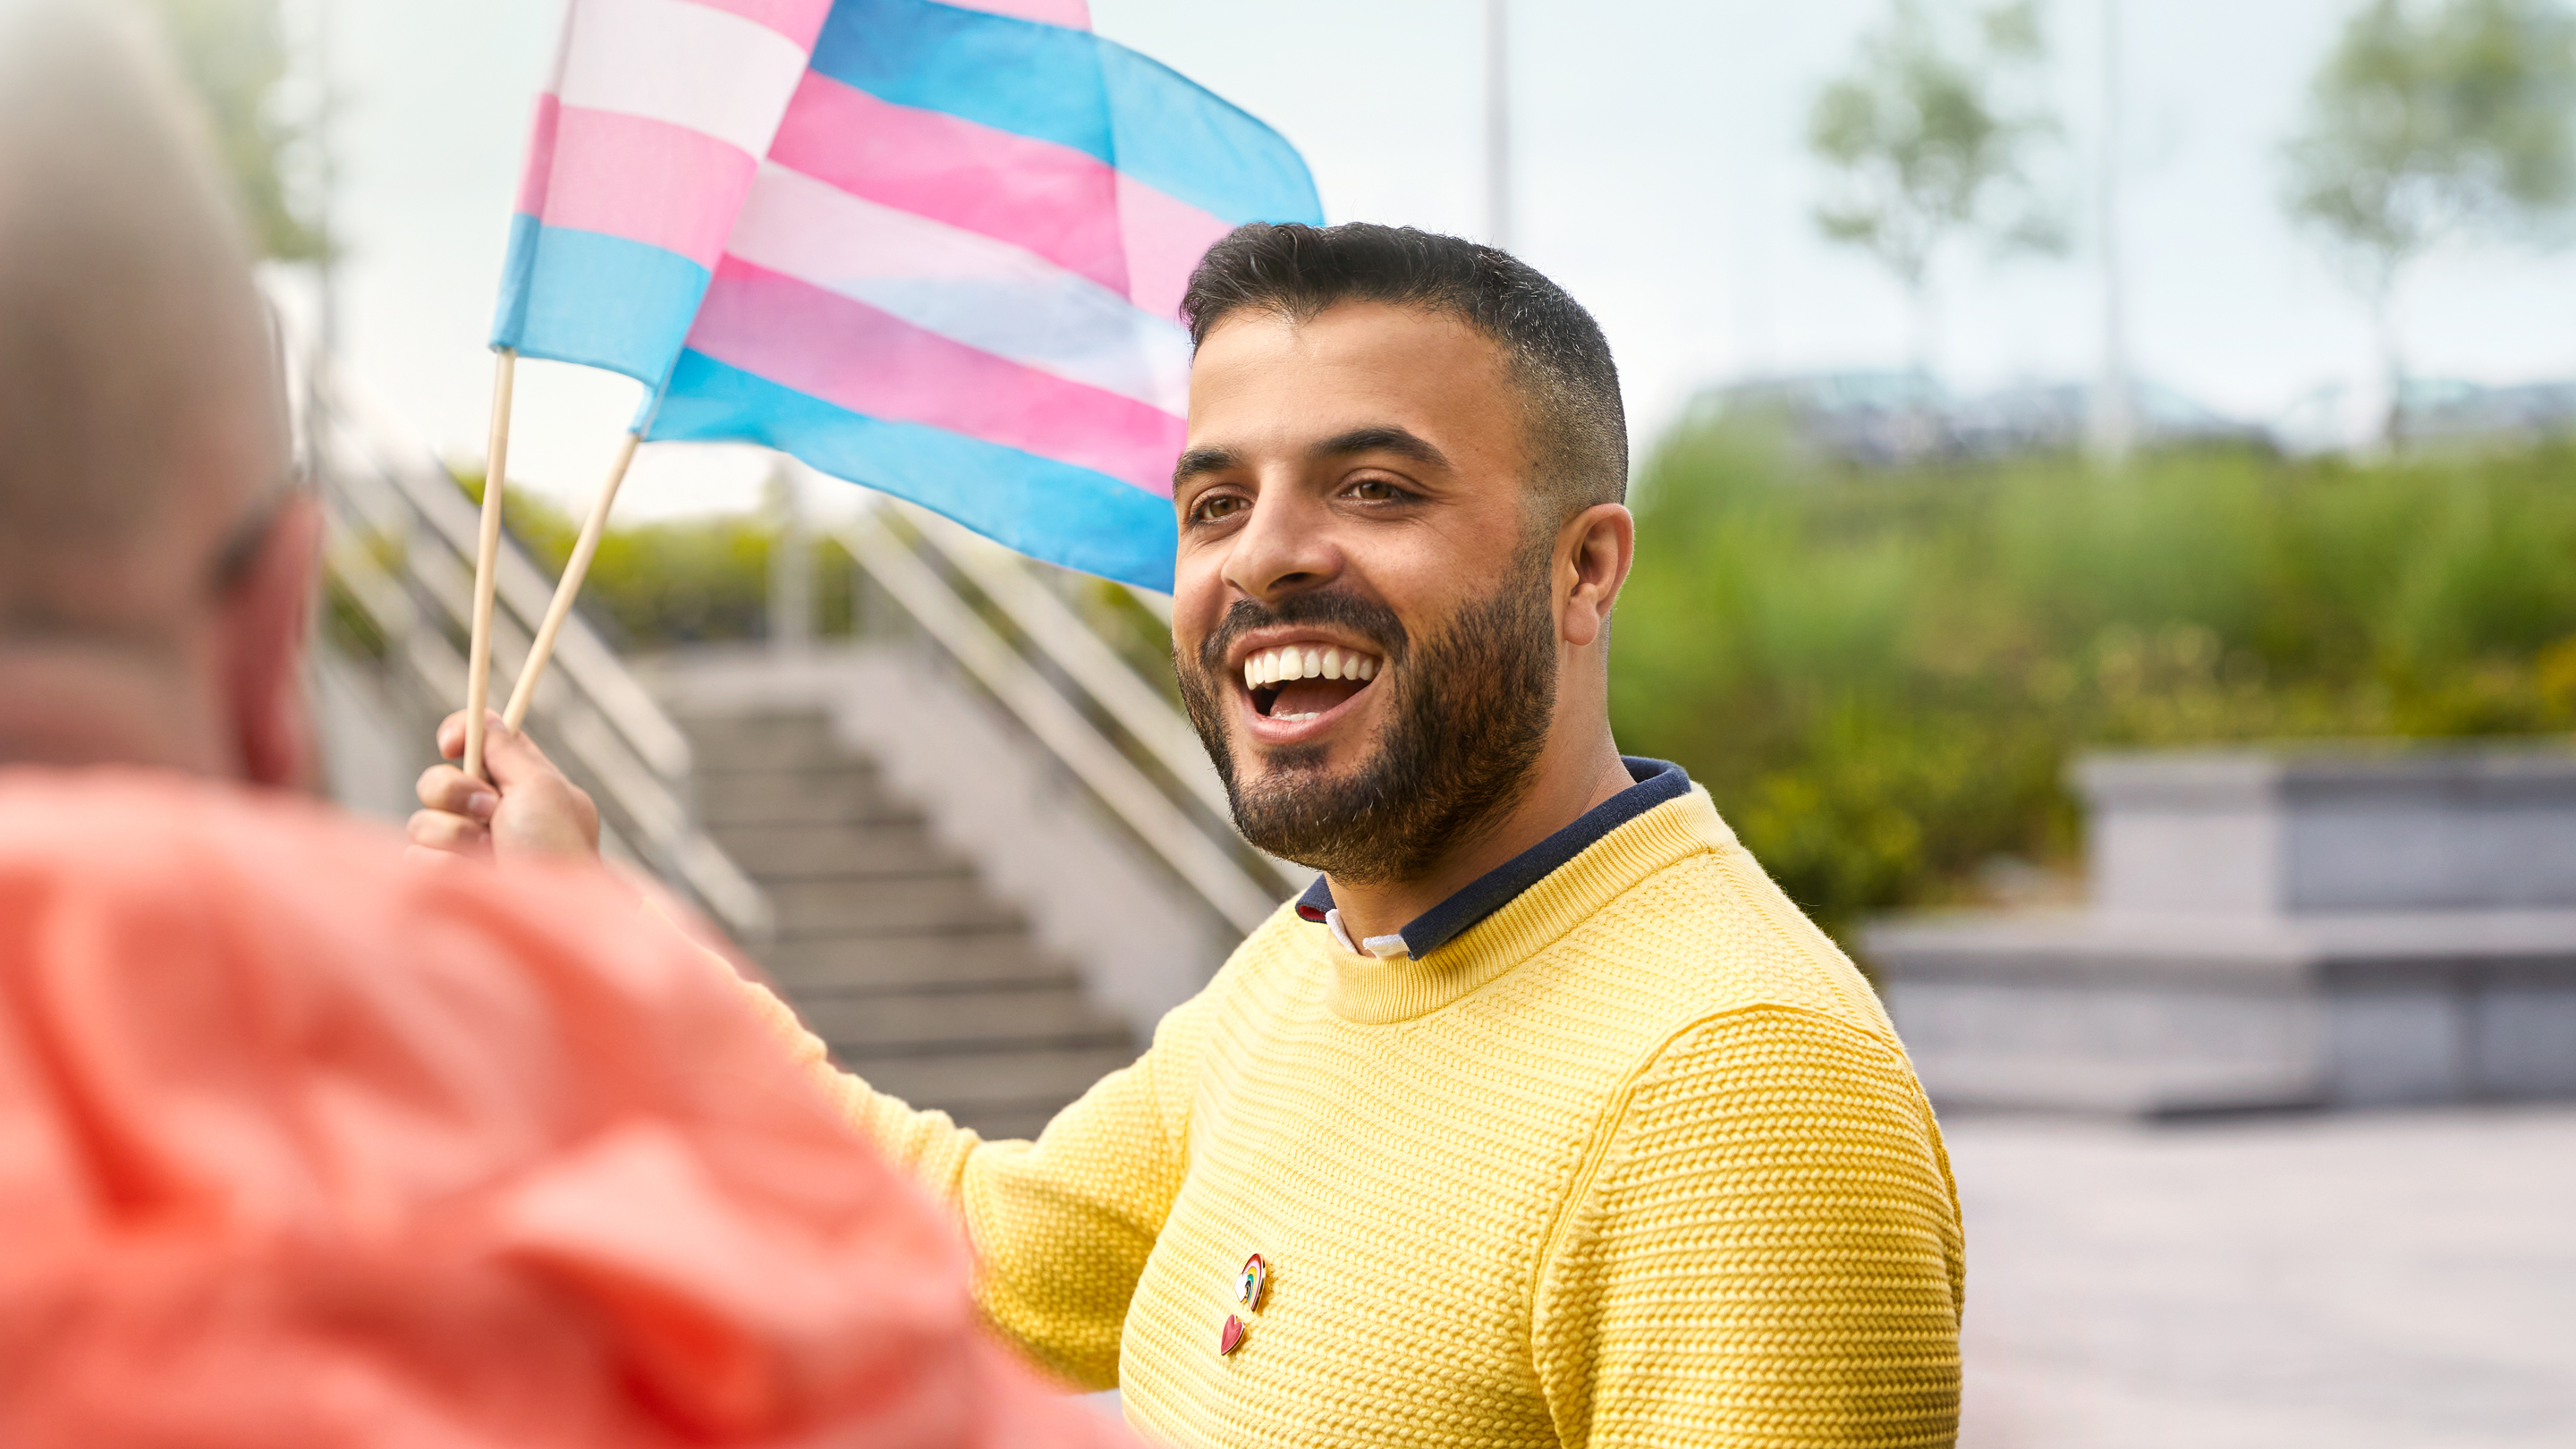 Apple Cork employee waving a transgender community flag.